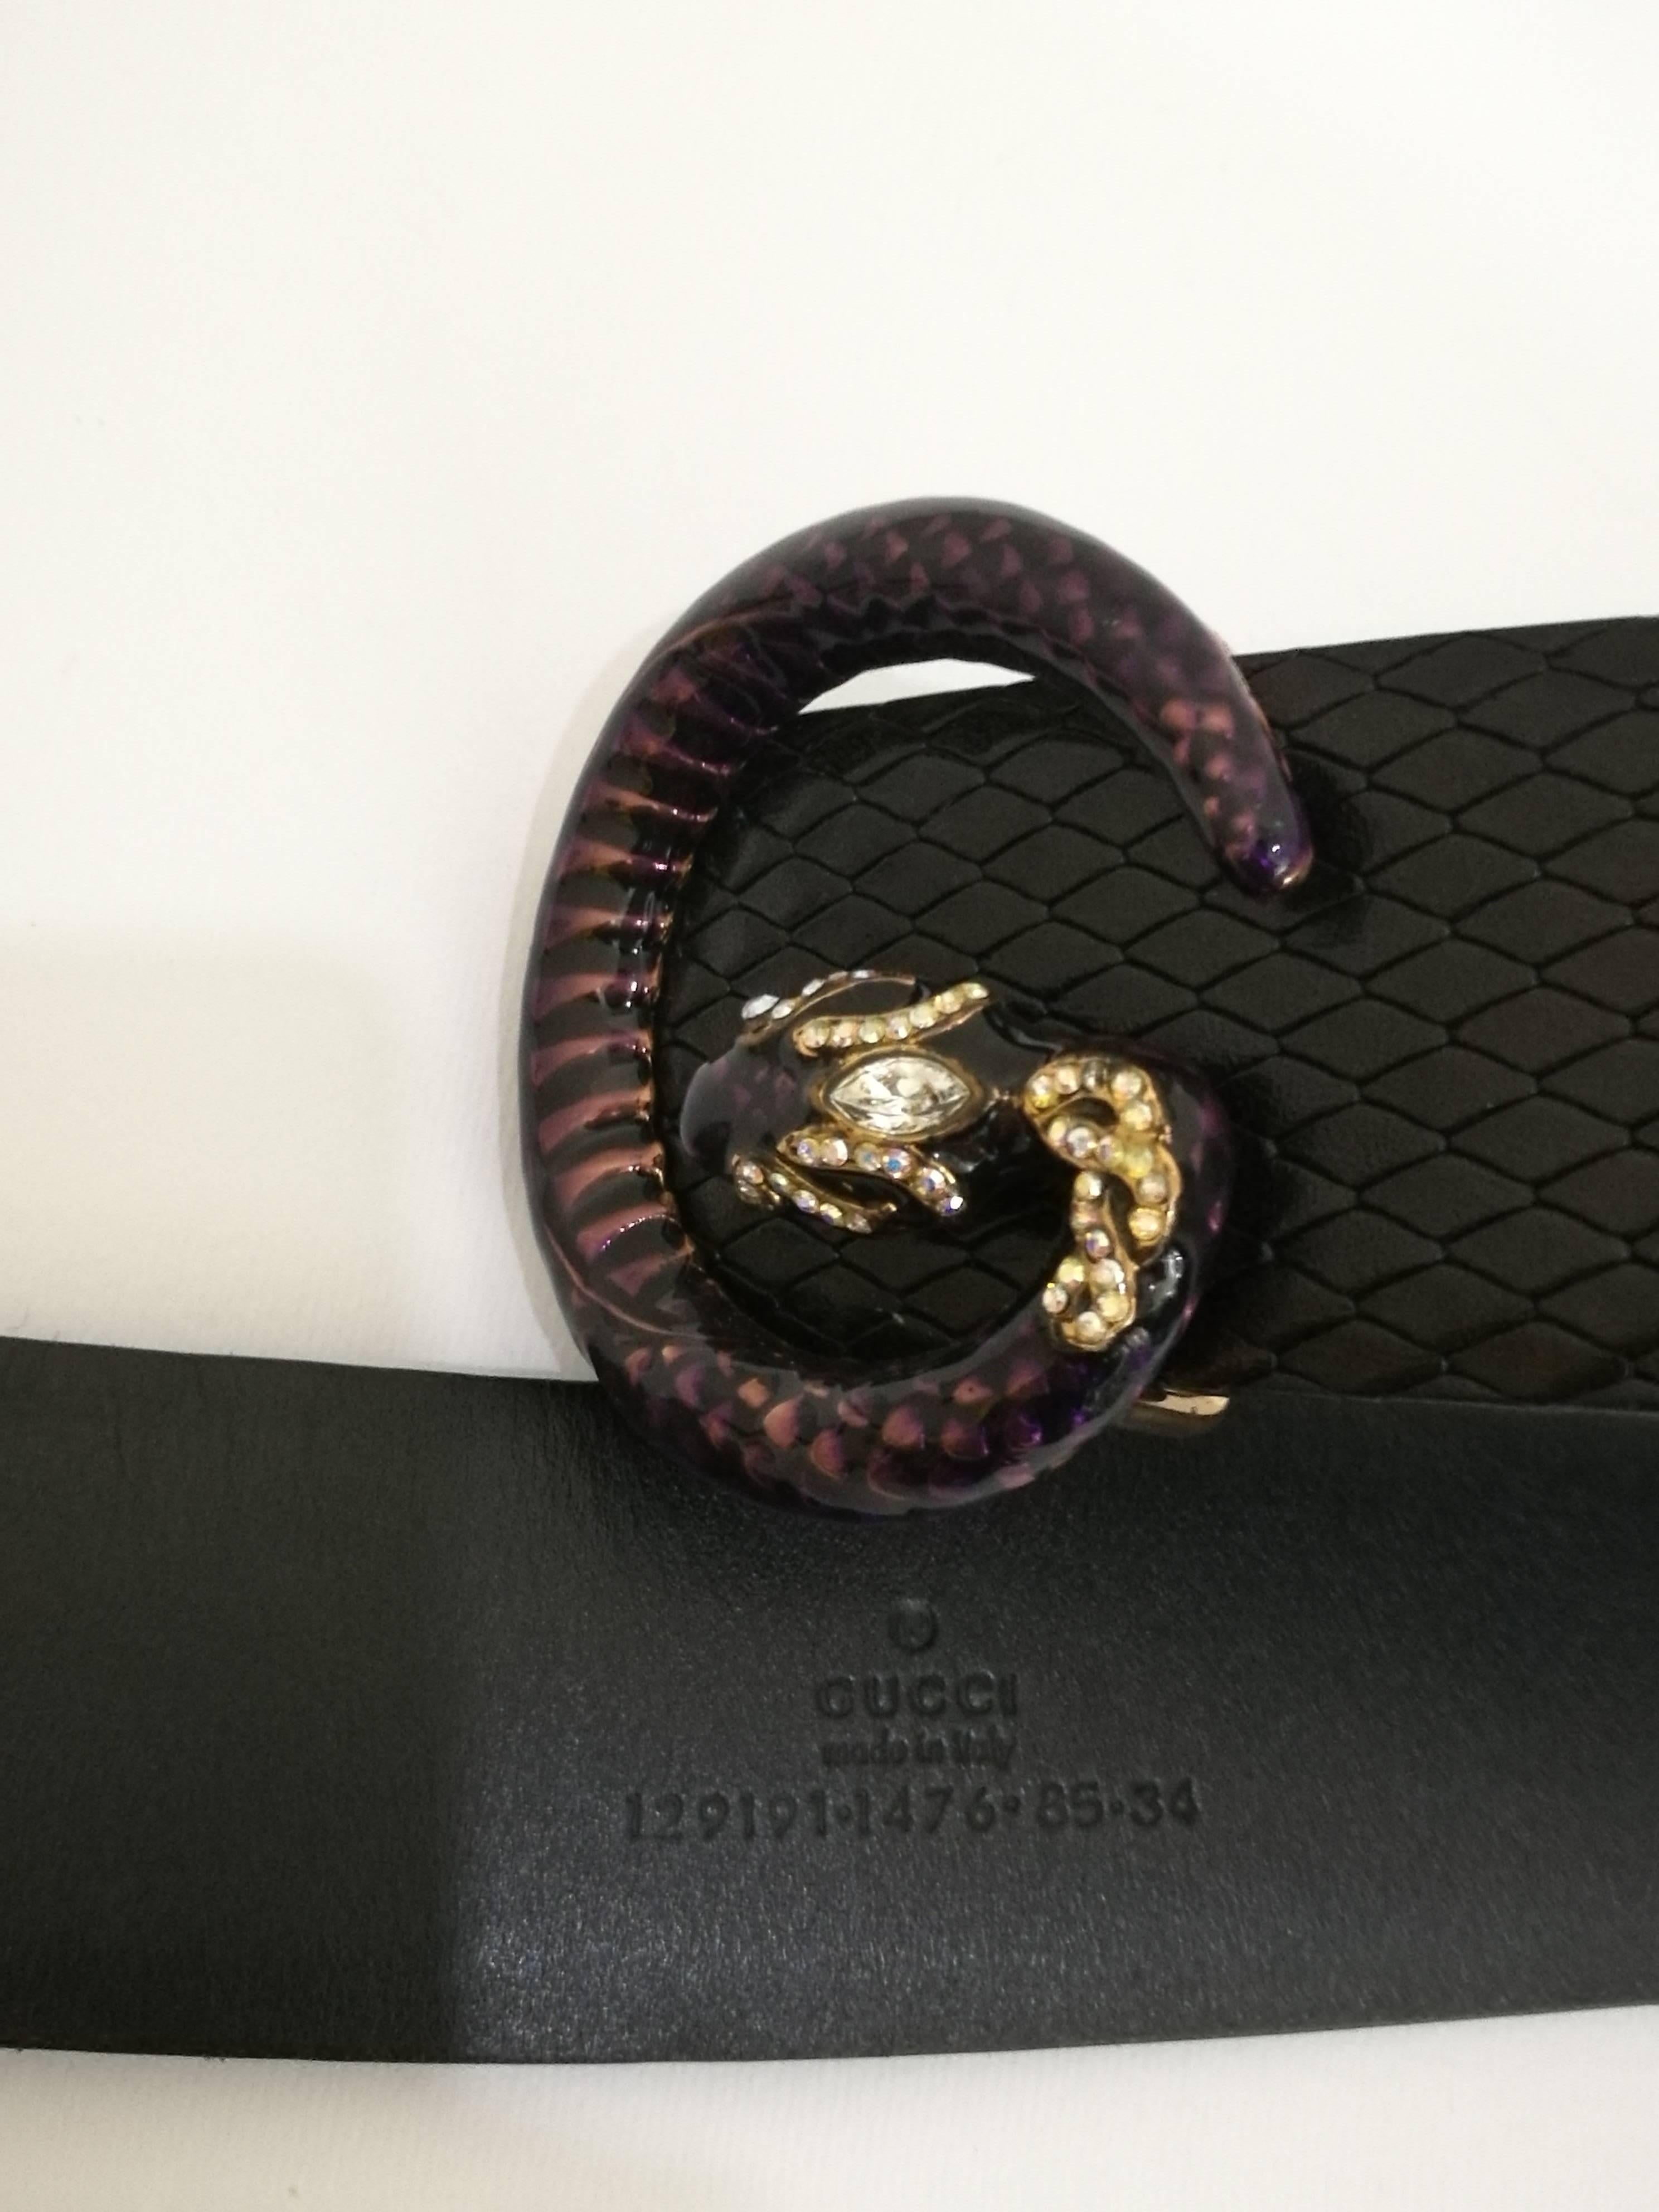 Gucci by Tom Ford black snake python purple dragon jewel belt
Size 85